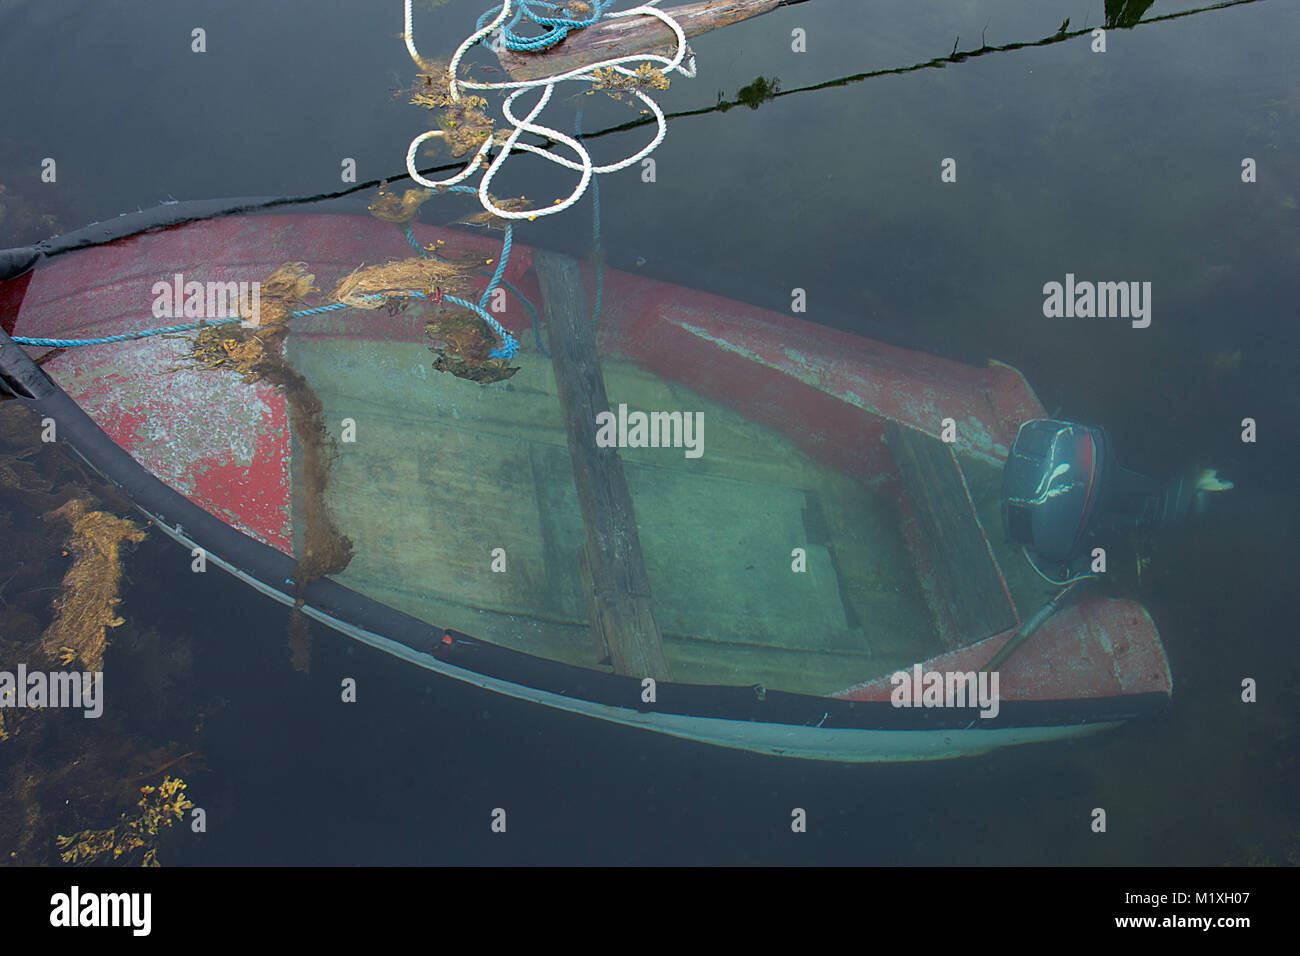 sunken boat Stock Photo